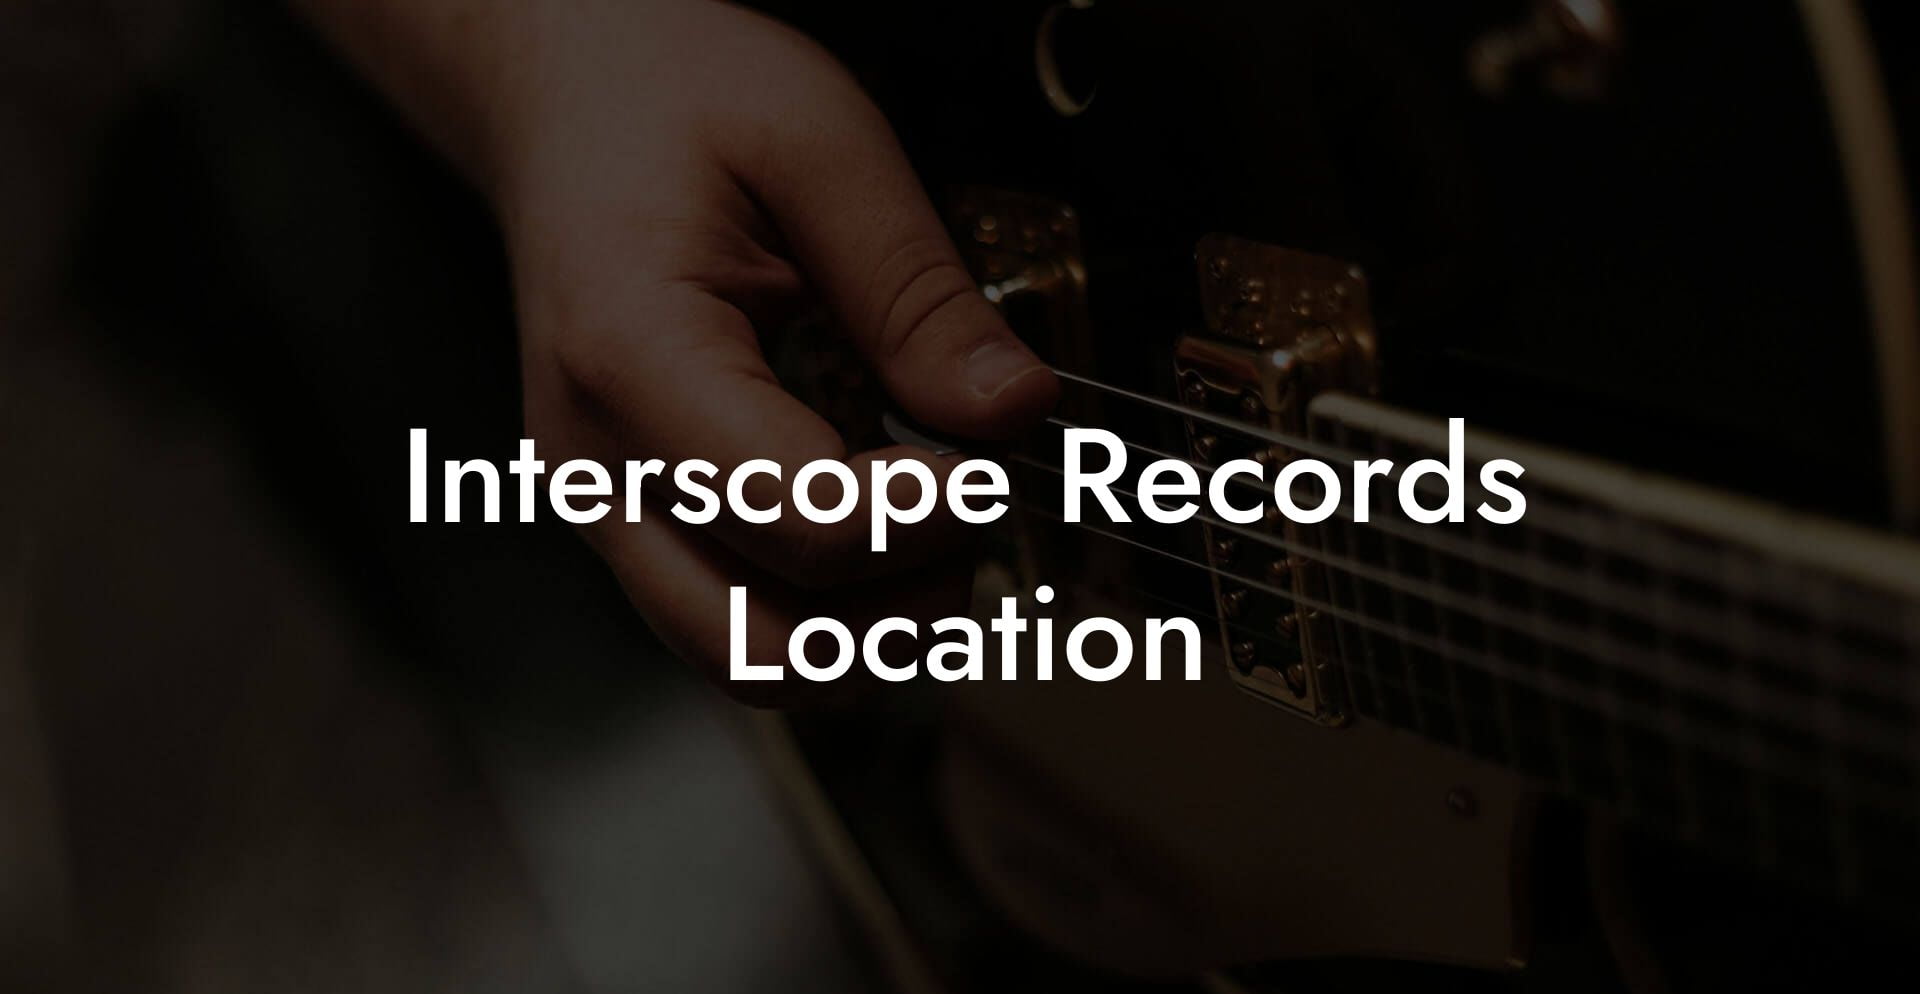 Interscope Records Location - Lyric Assistant